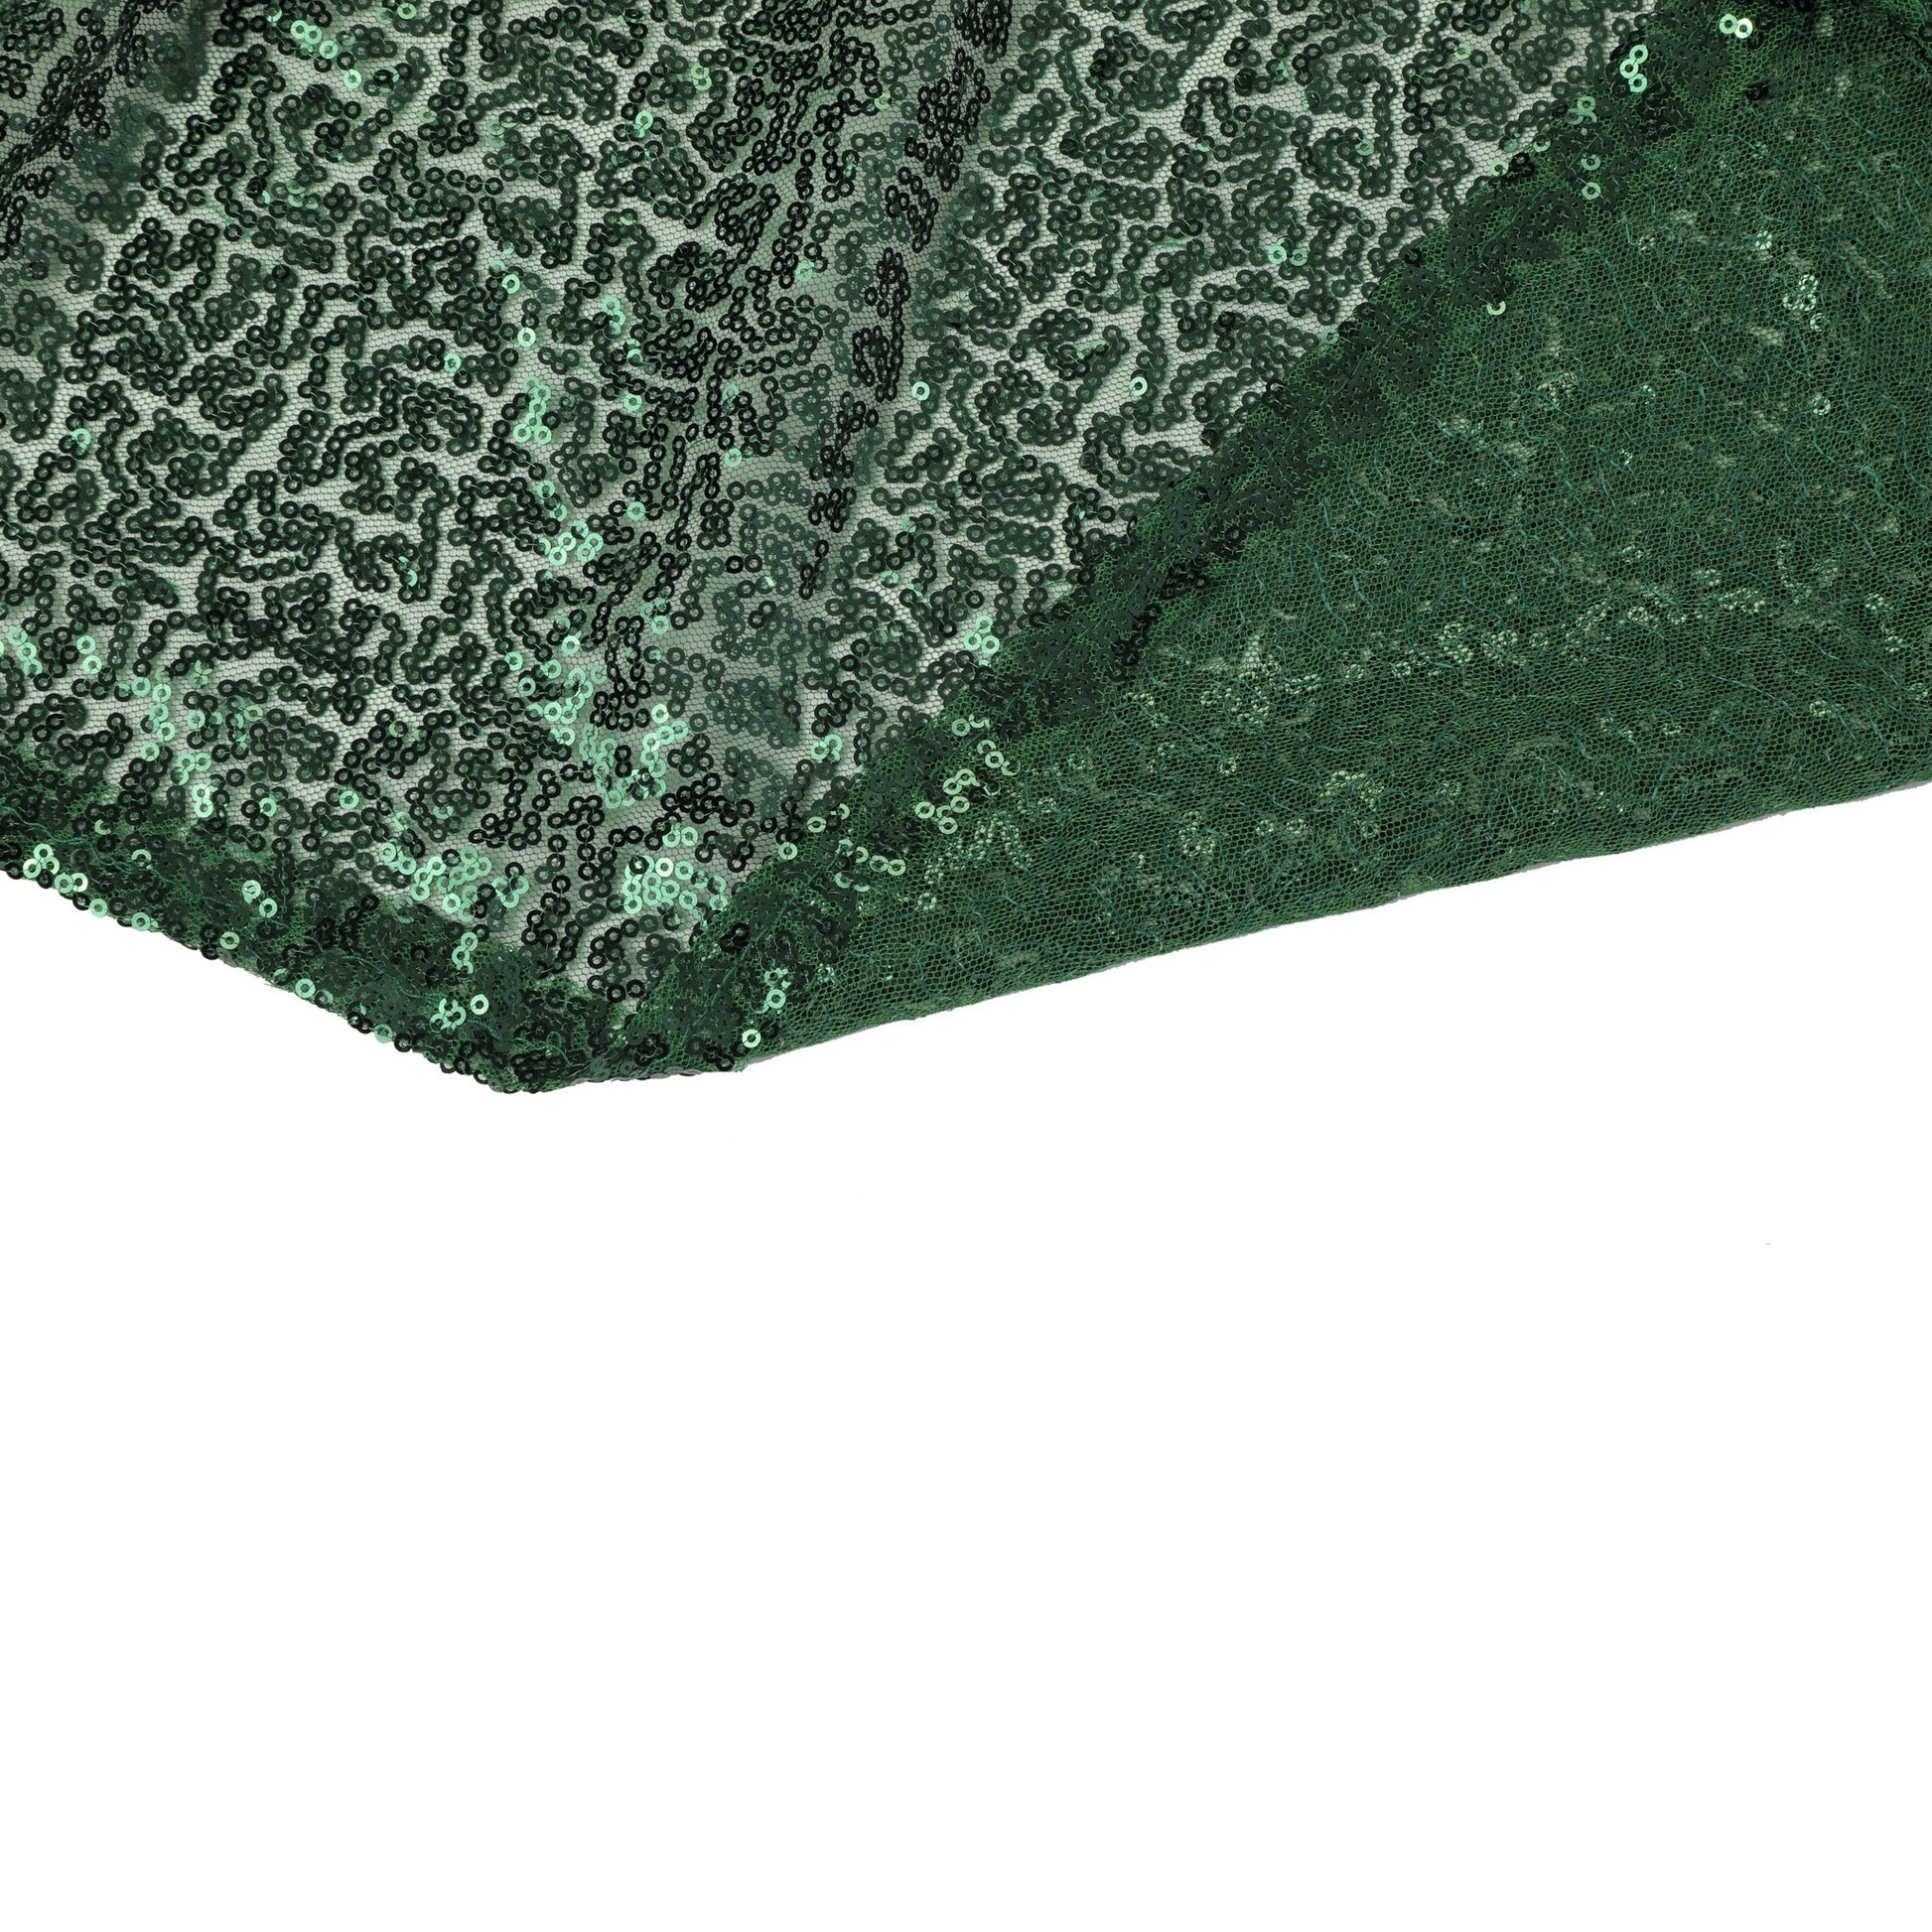 Glitz Sequin Mesh Net Tablecloth 90"x156" Rectangular - Emerald Green